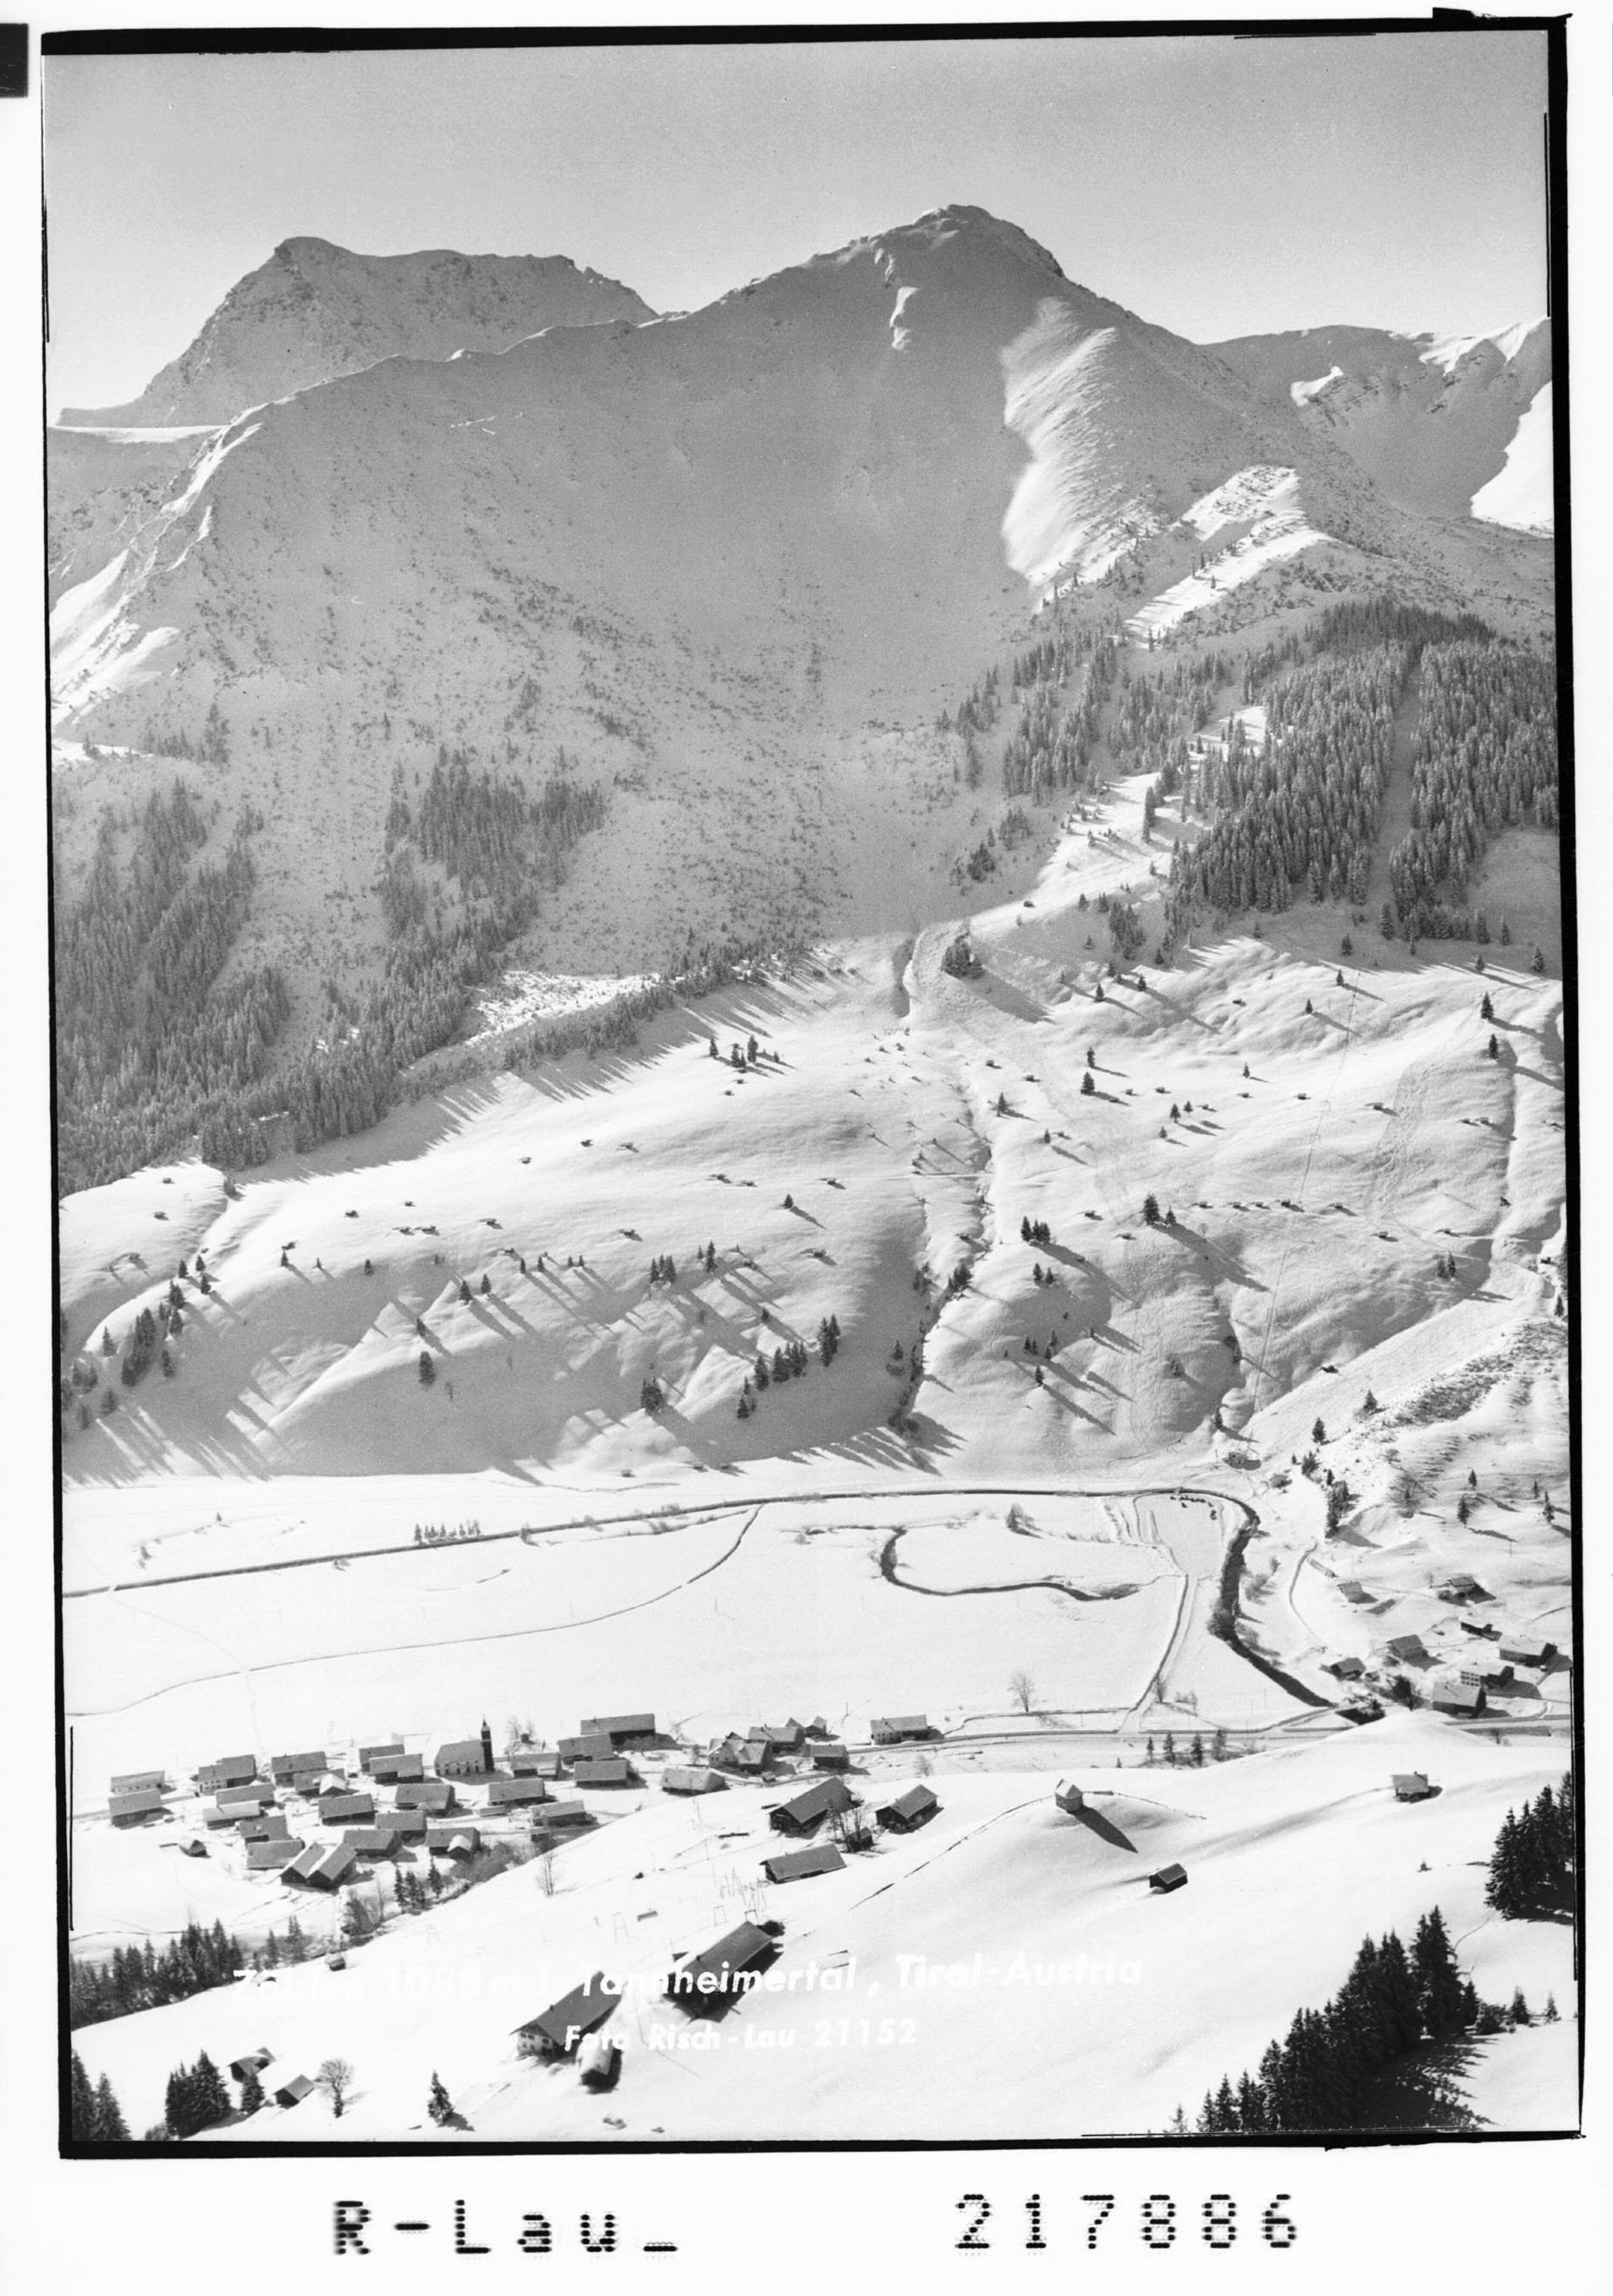 Zöblen 1088 m im Tannheimertal, Tirol - Austria></div>


    <hr>
    <div class=